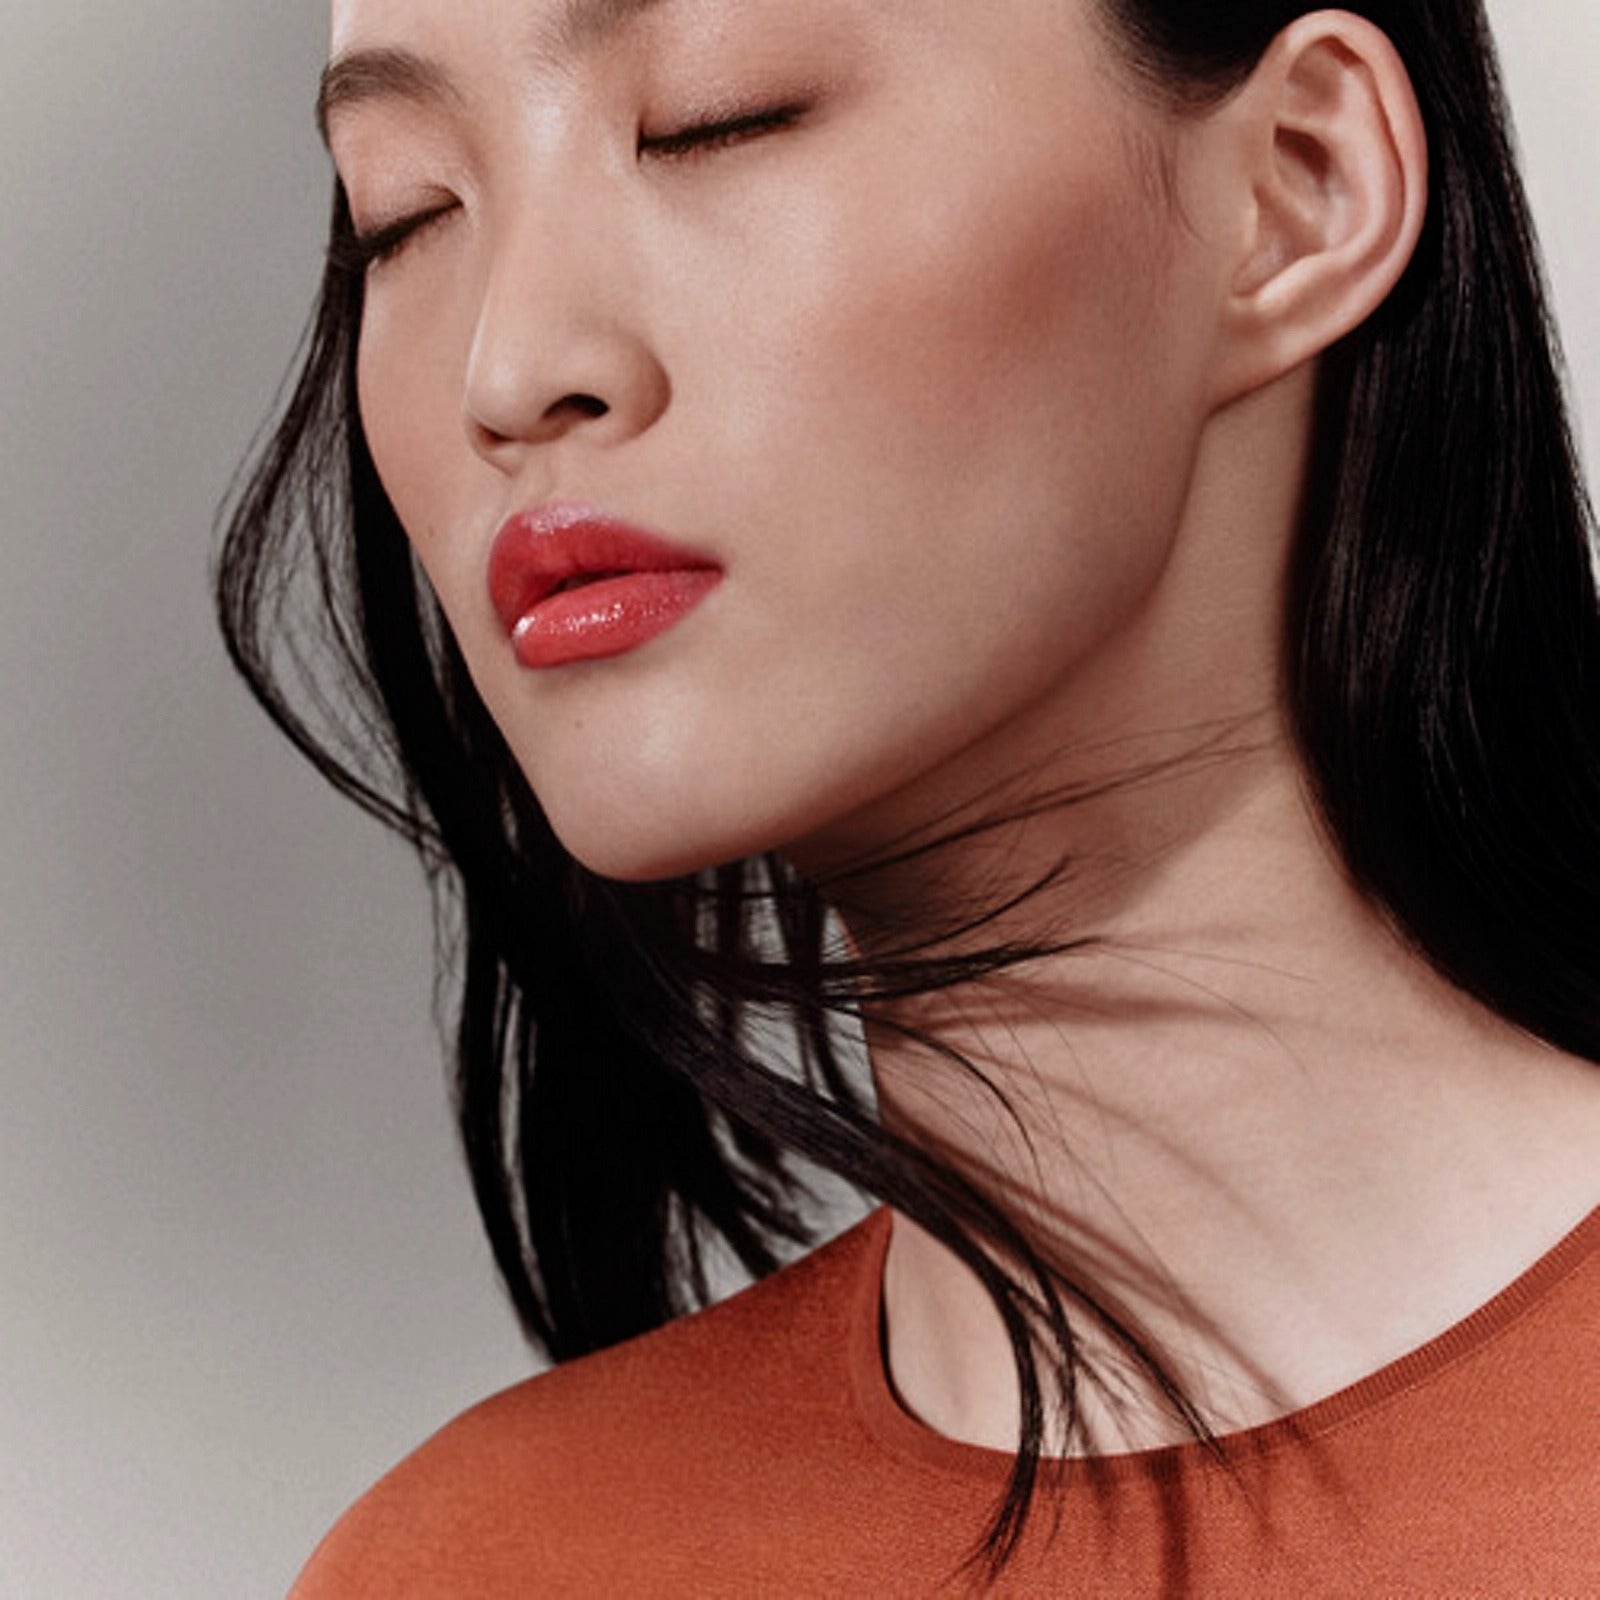 Son Rouge Hermès Shiny Lipstick Limited Edition - Kallos Vietnam